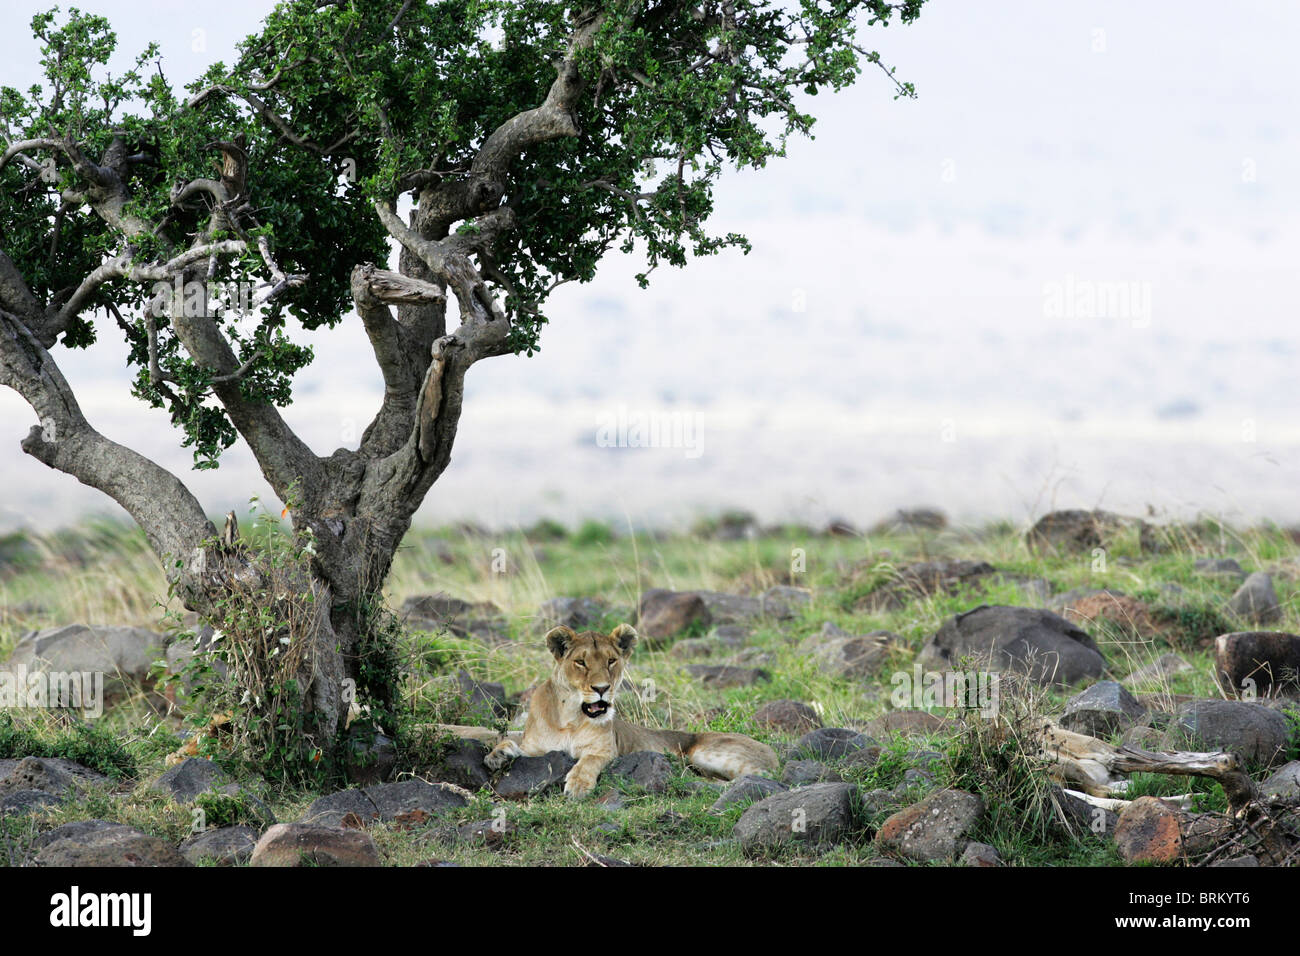 Lioness lying on rocks under a misshapen tree Stock Photo